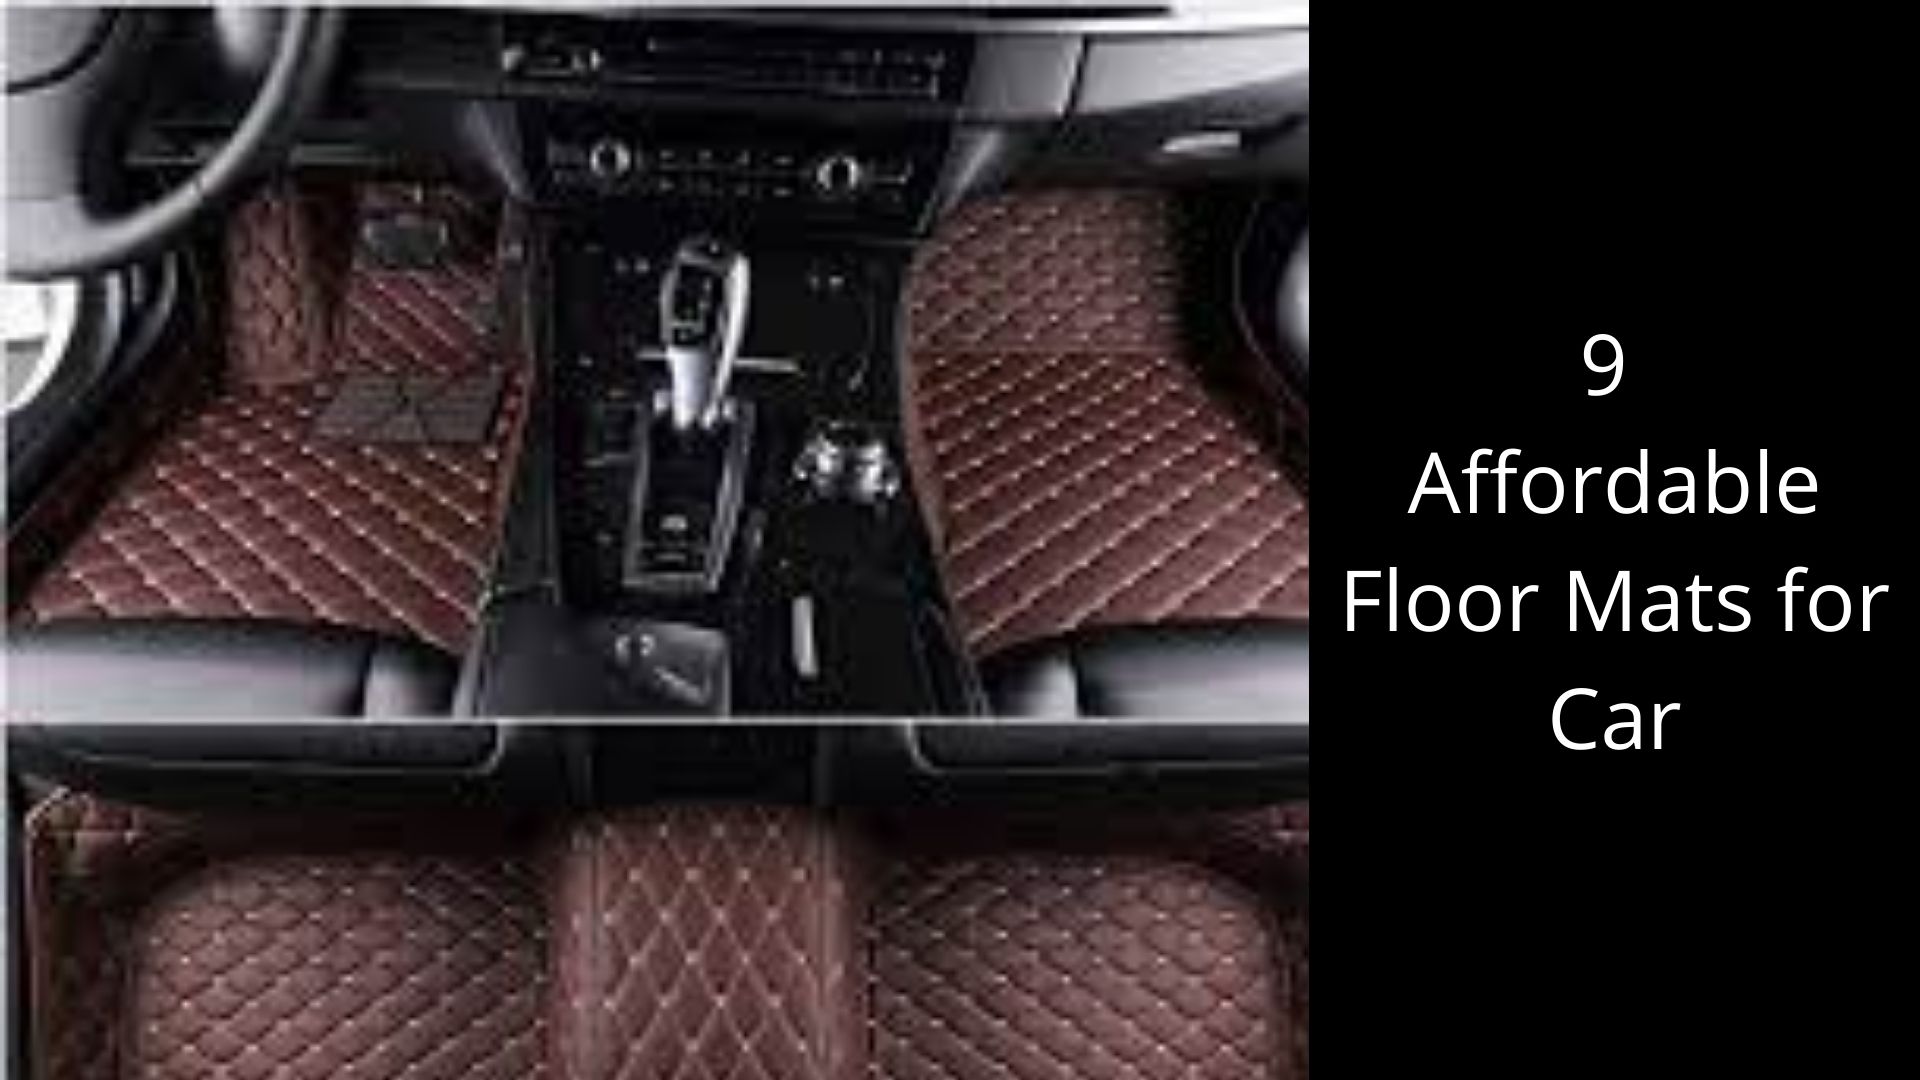 Affordable Floor Mats for Car